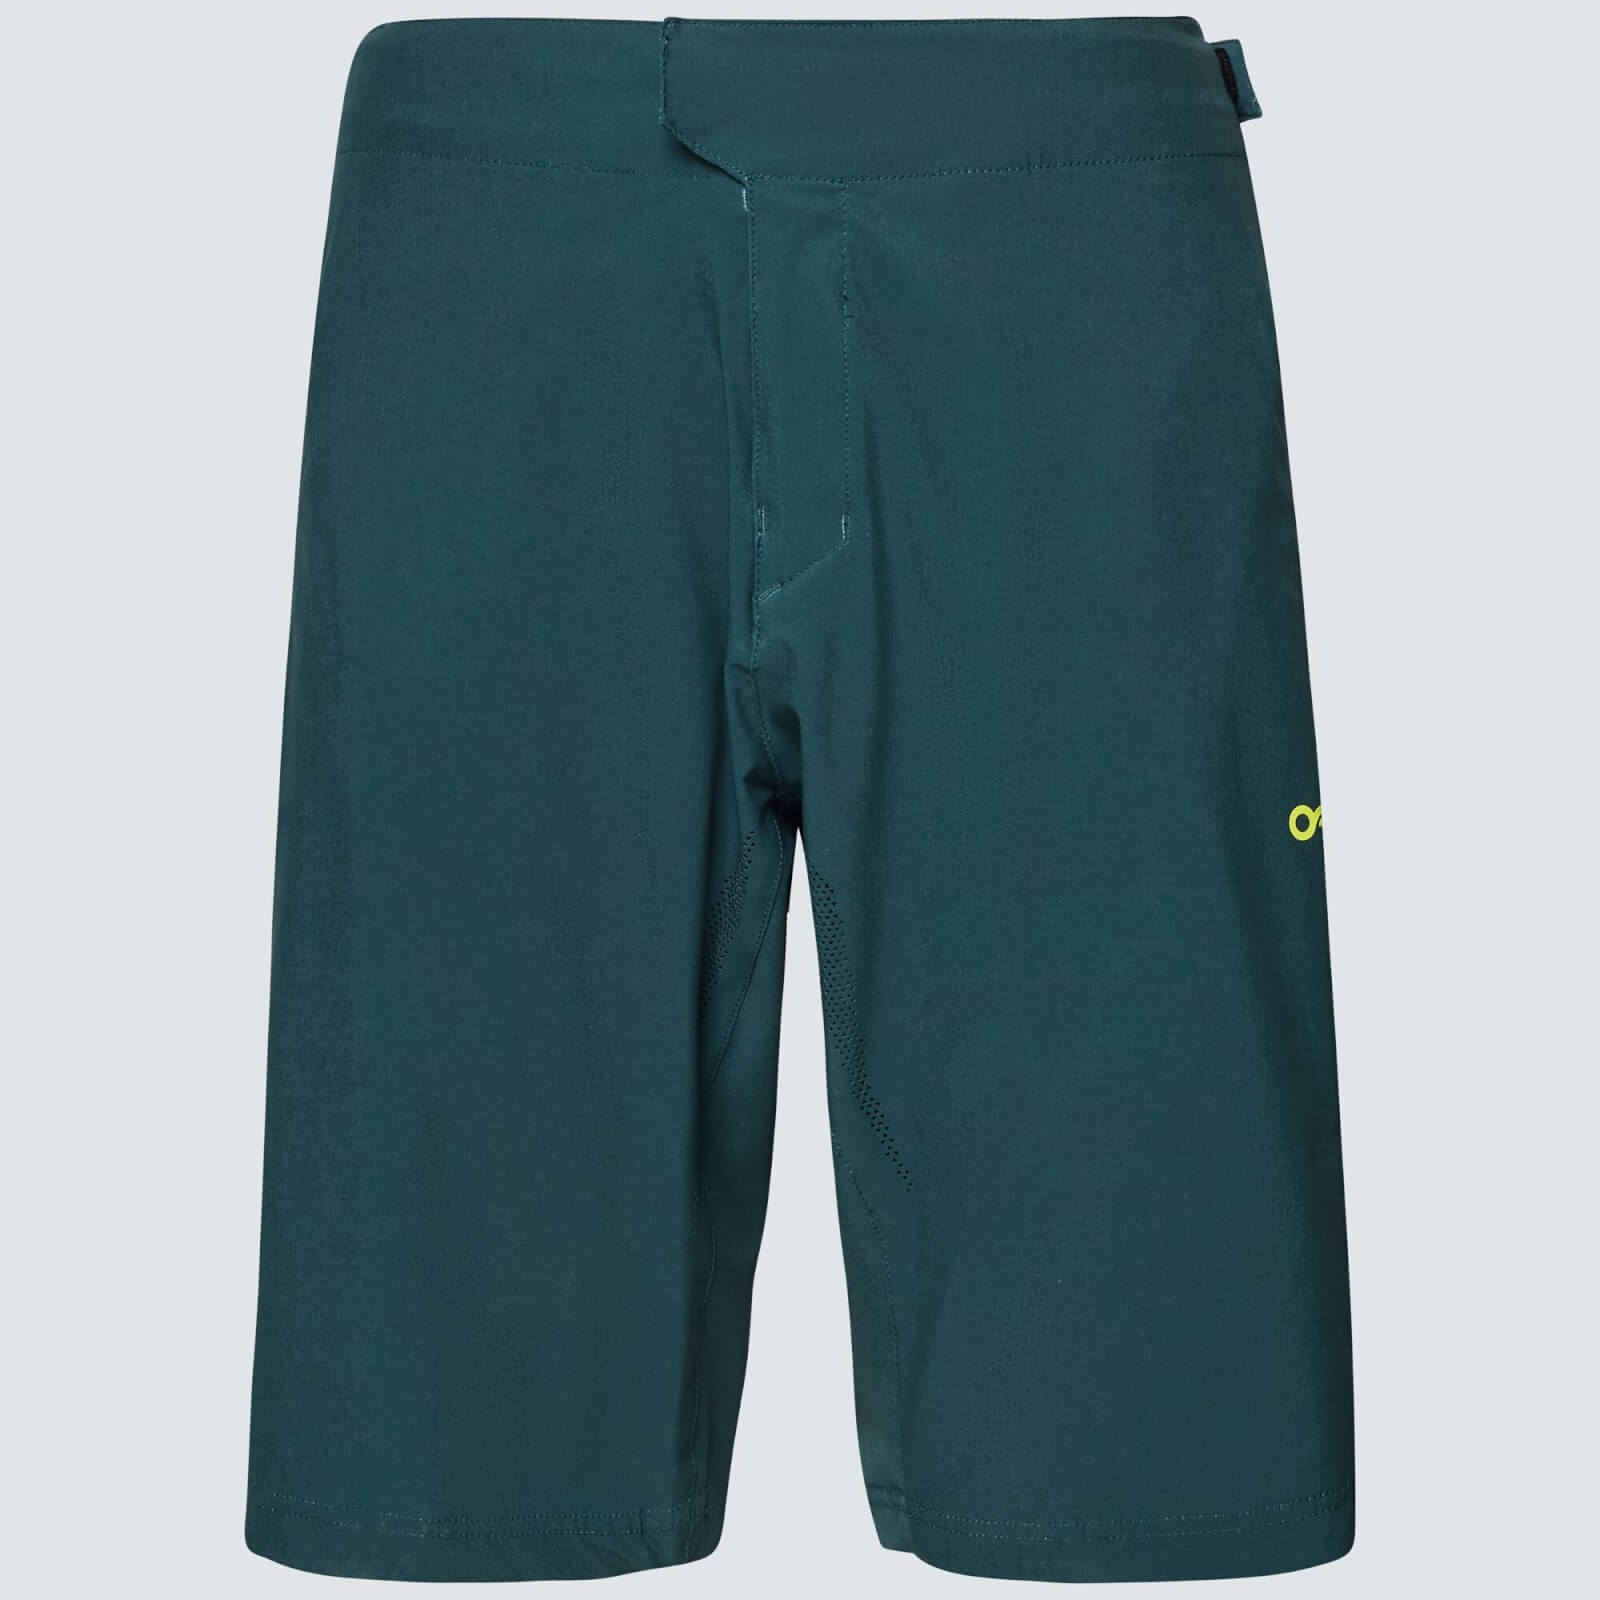 Oakley Reduct Berm Shorts - 34 - Hunter Green